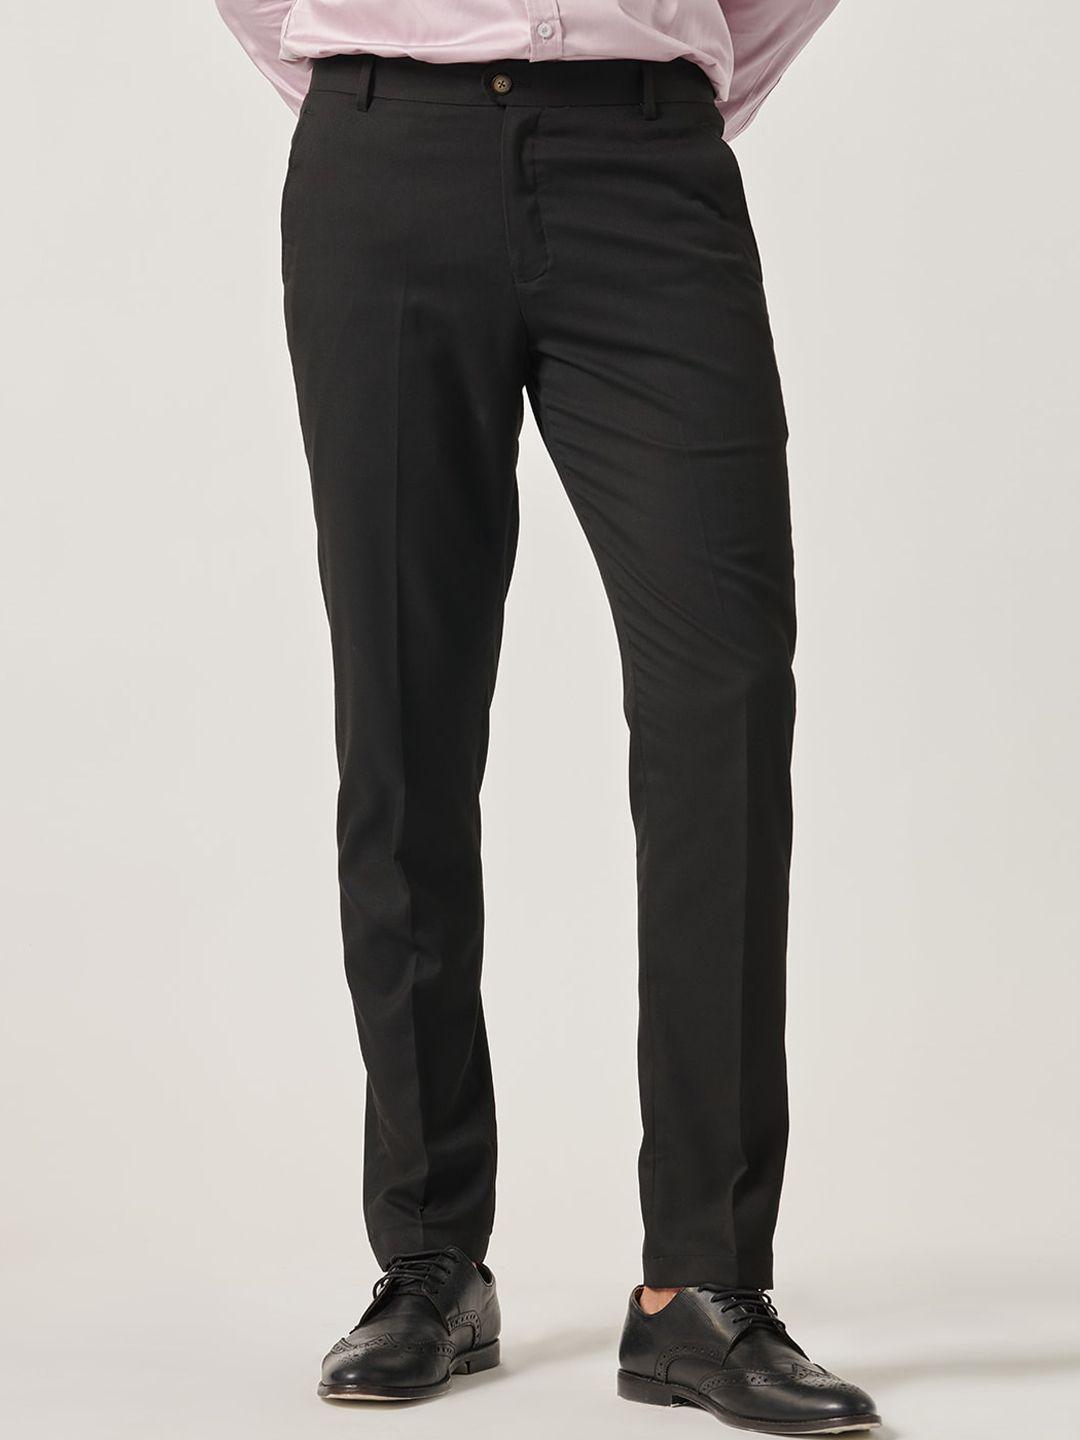 mr-button-men-slim-fit-formal-trousers